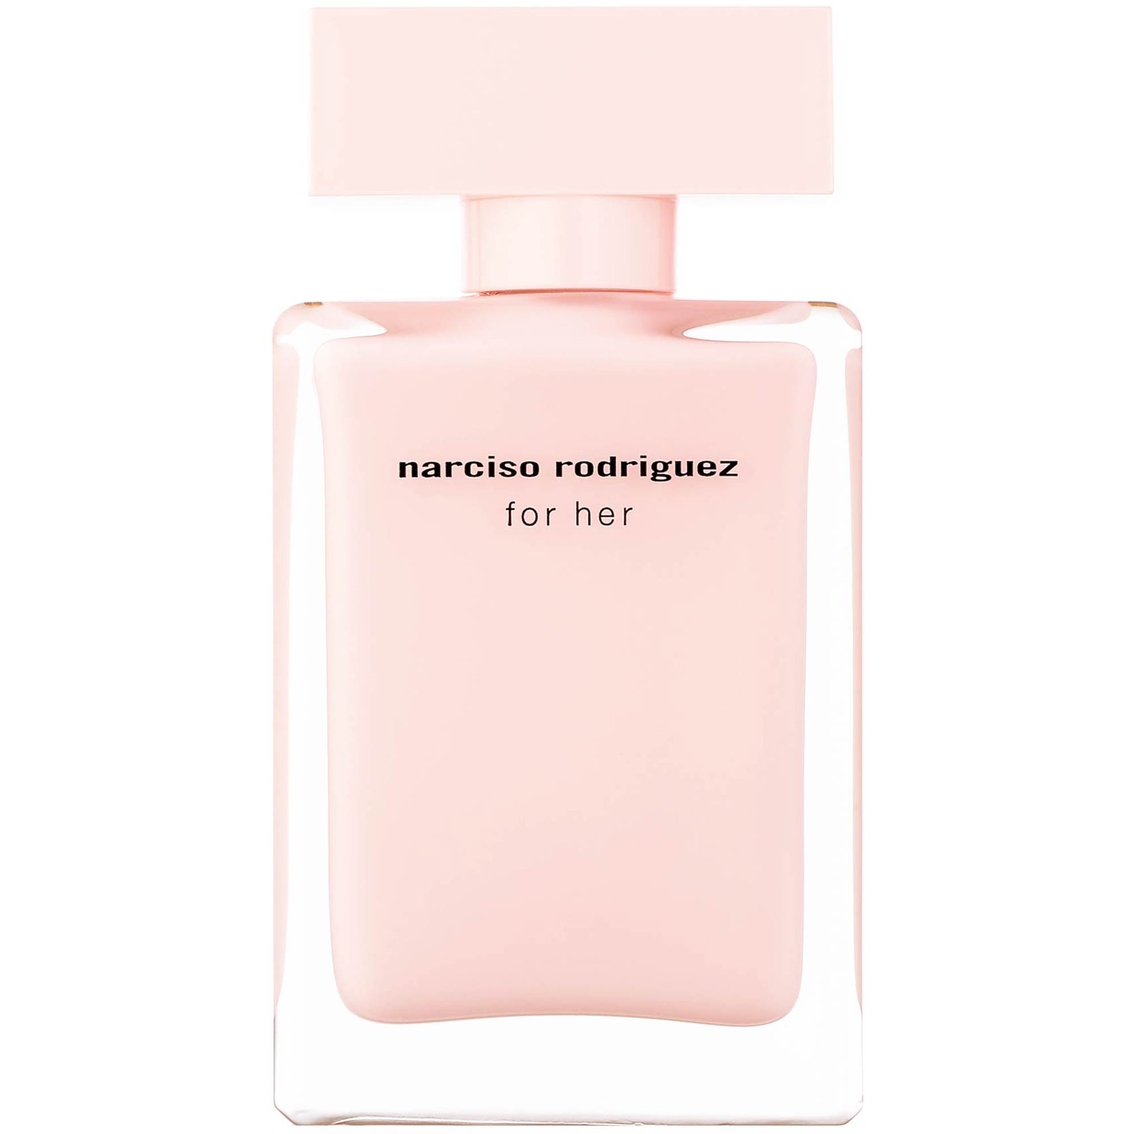 Narciso Rodriguez for Her Eau de Parfum - Image 2 of 2